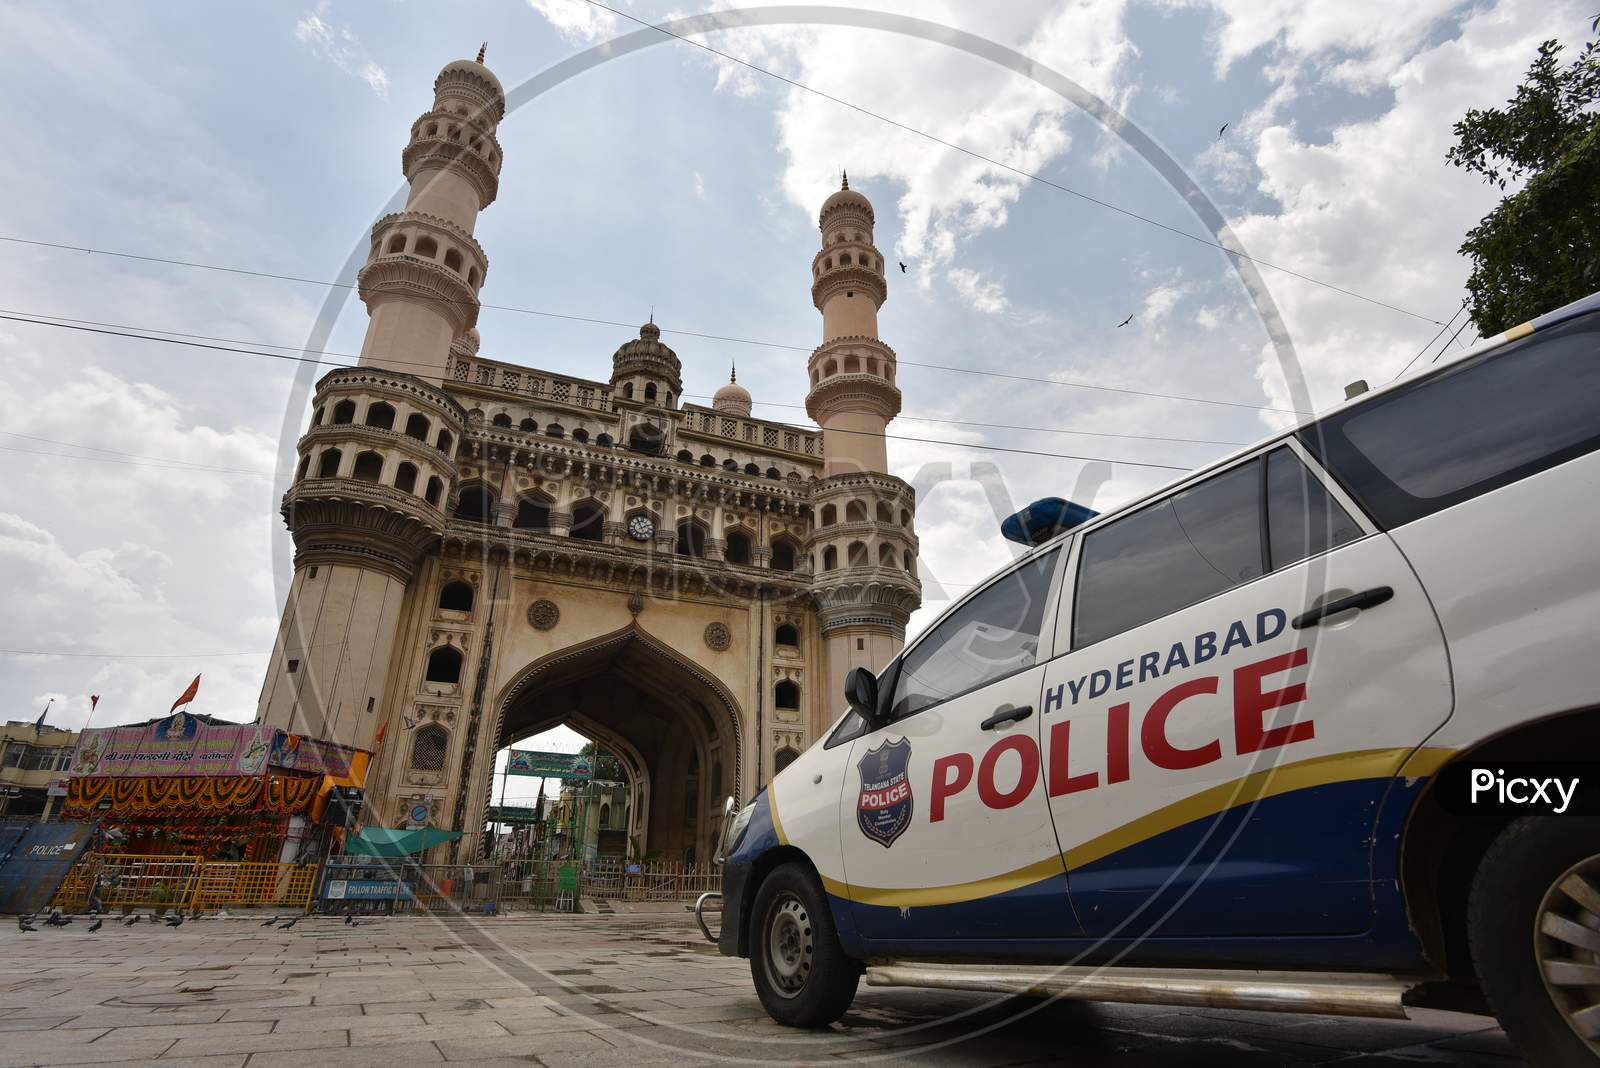 Hyderabad Police Vehicle at Charminar